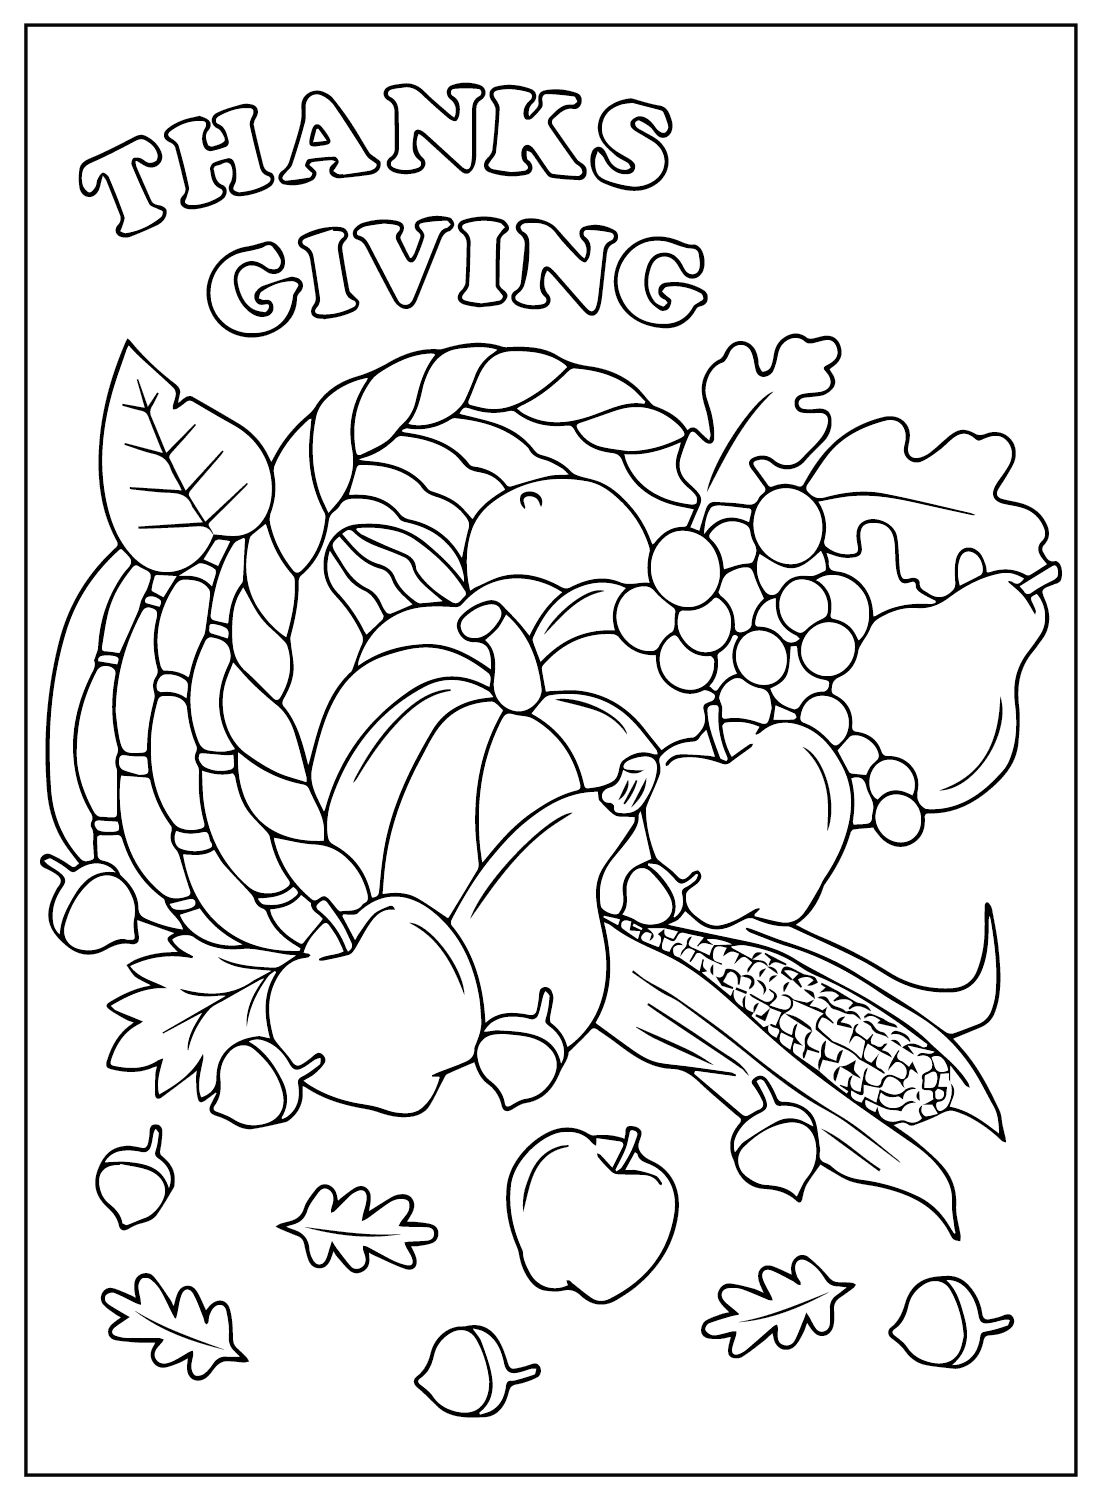 November ThanksGiving Coloring Page